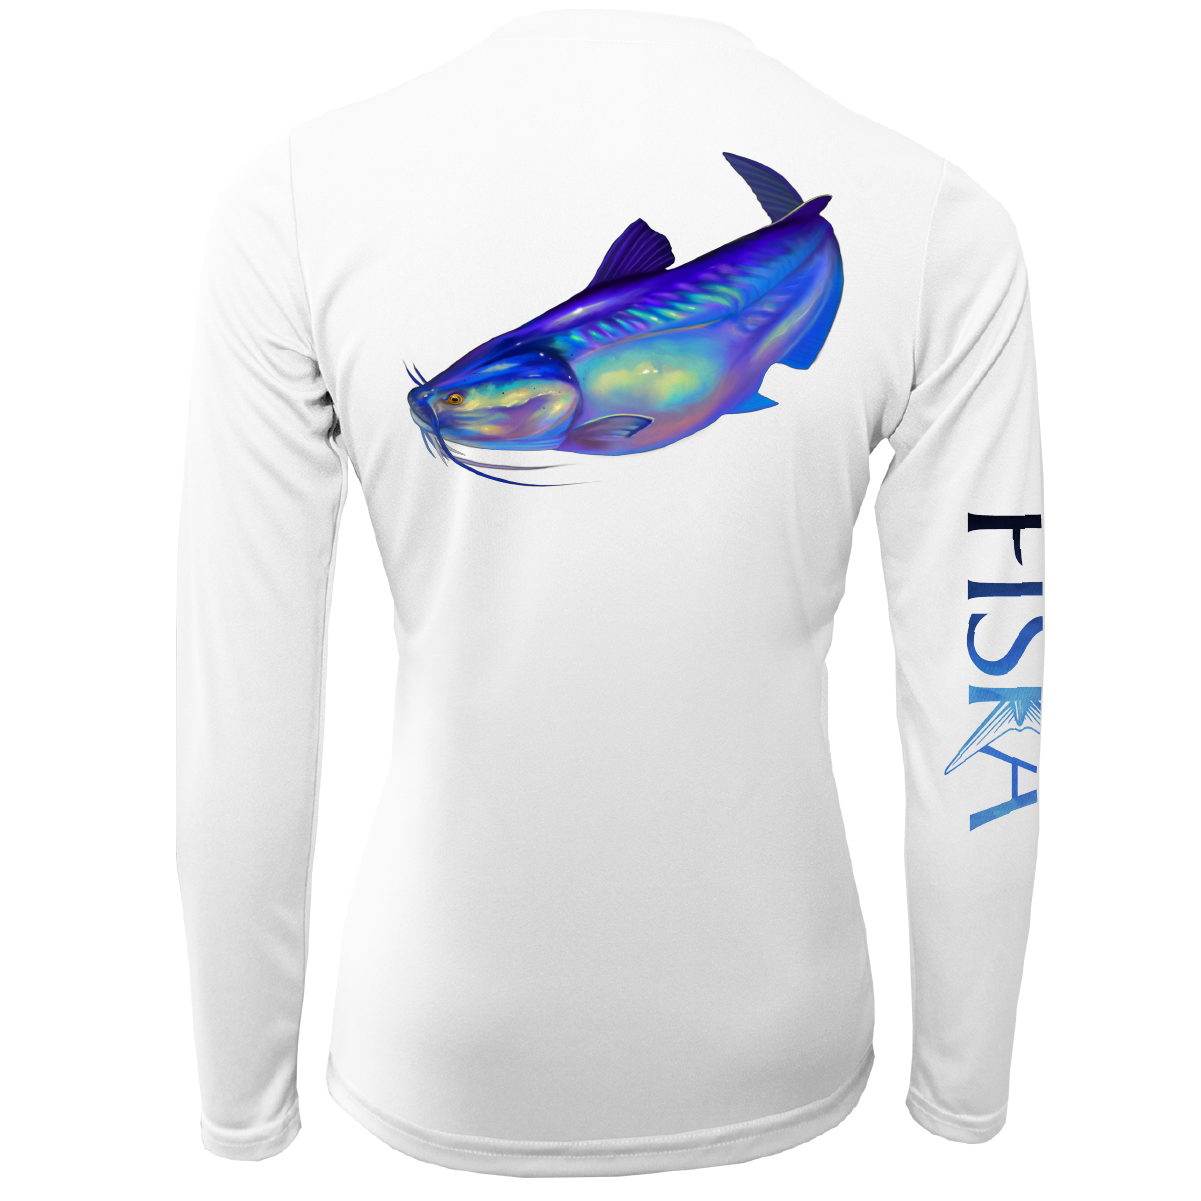 Catfish Long-Sleeve Dry-Fit Shirt